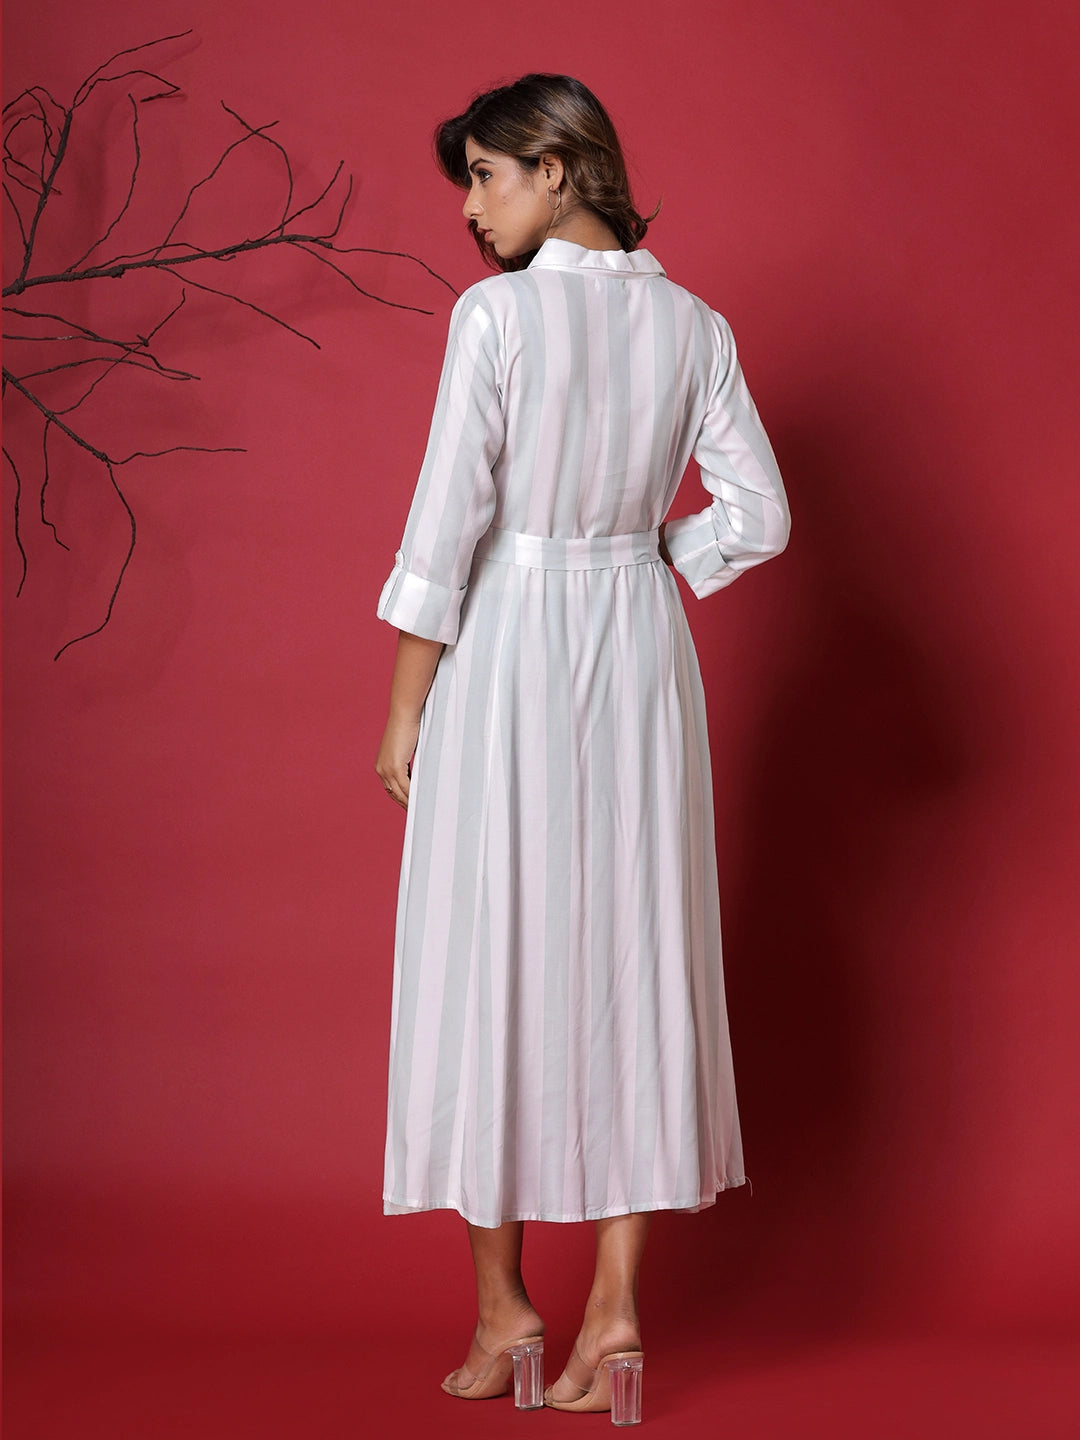 Pristine Elegance: White Gown